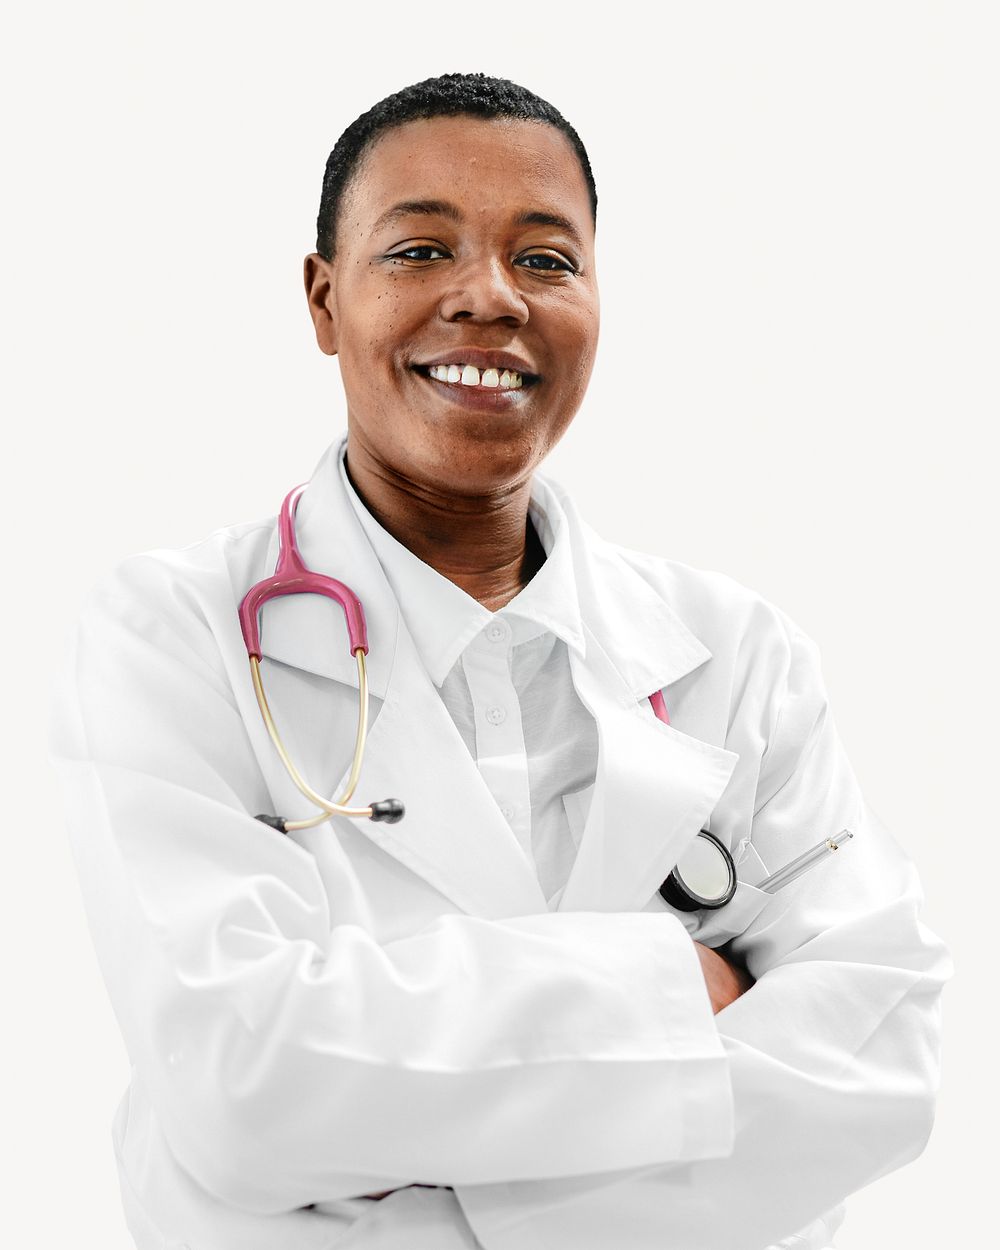 Black doctor smile isolated image on white